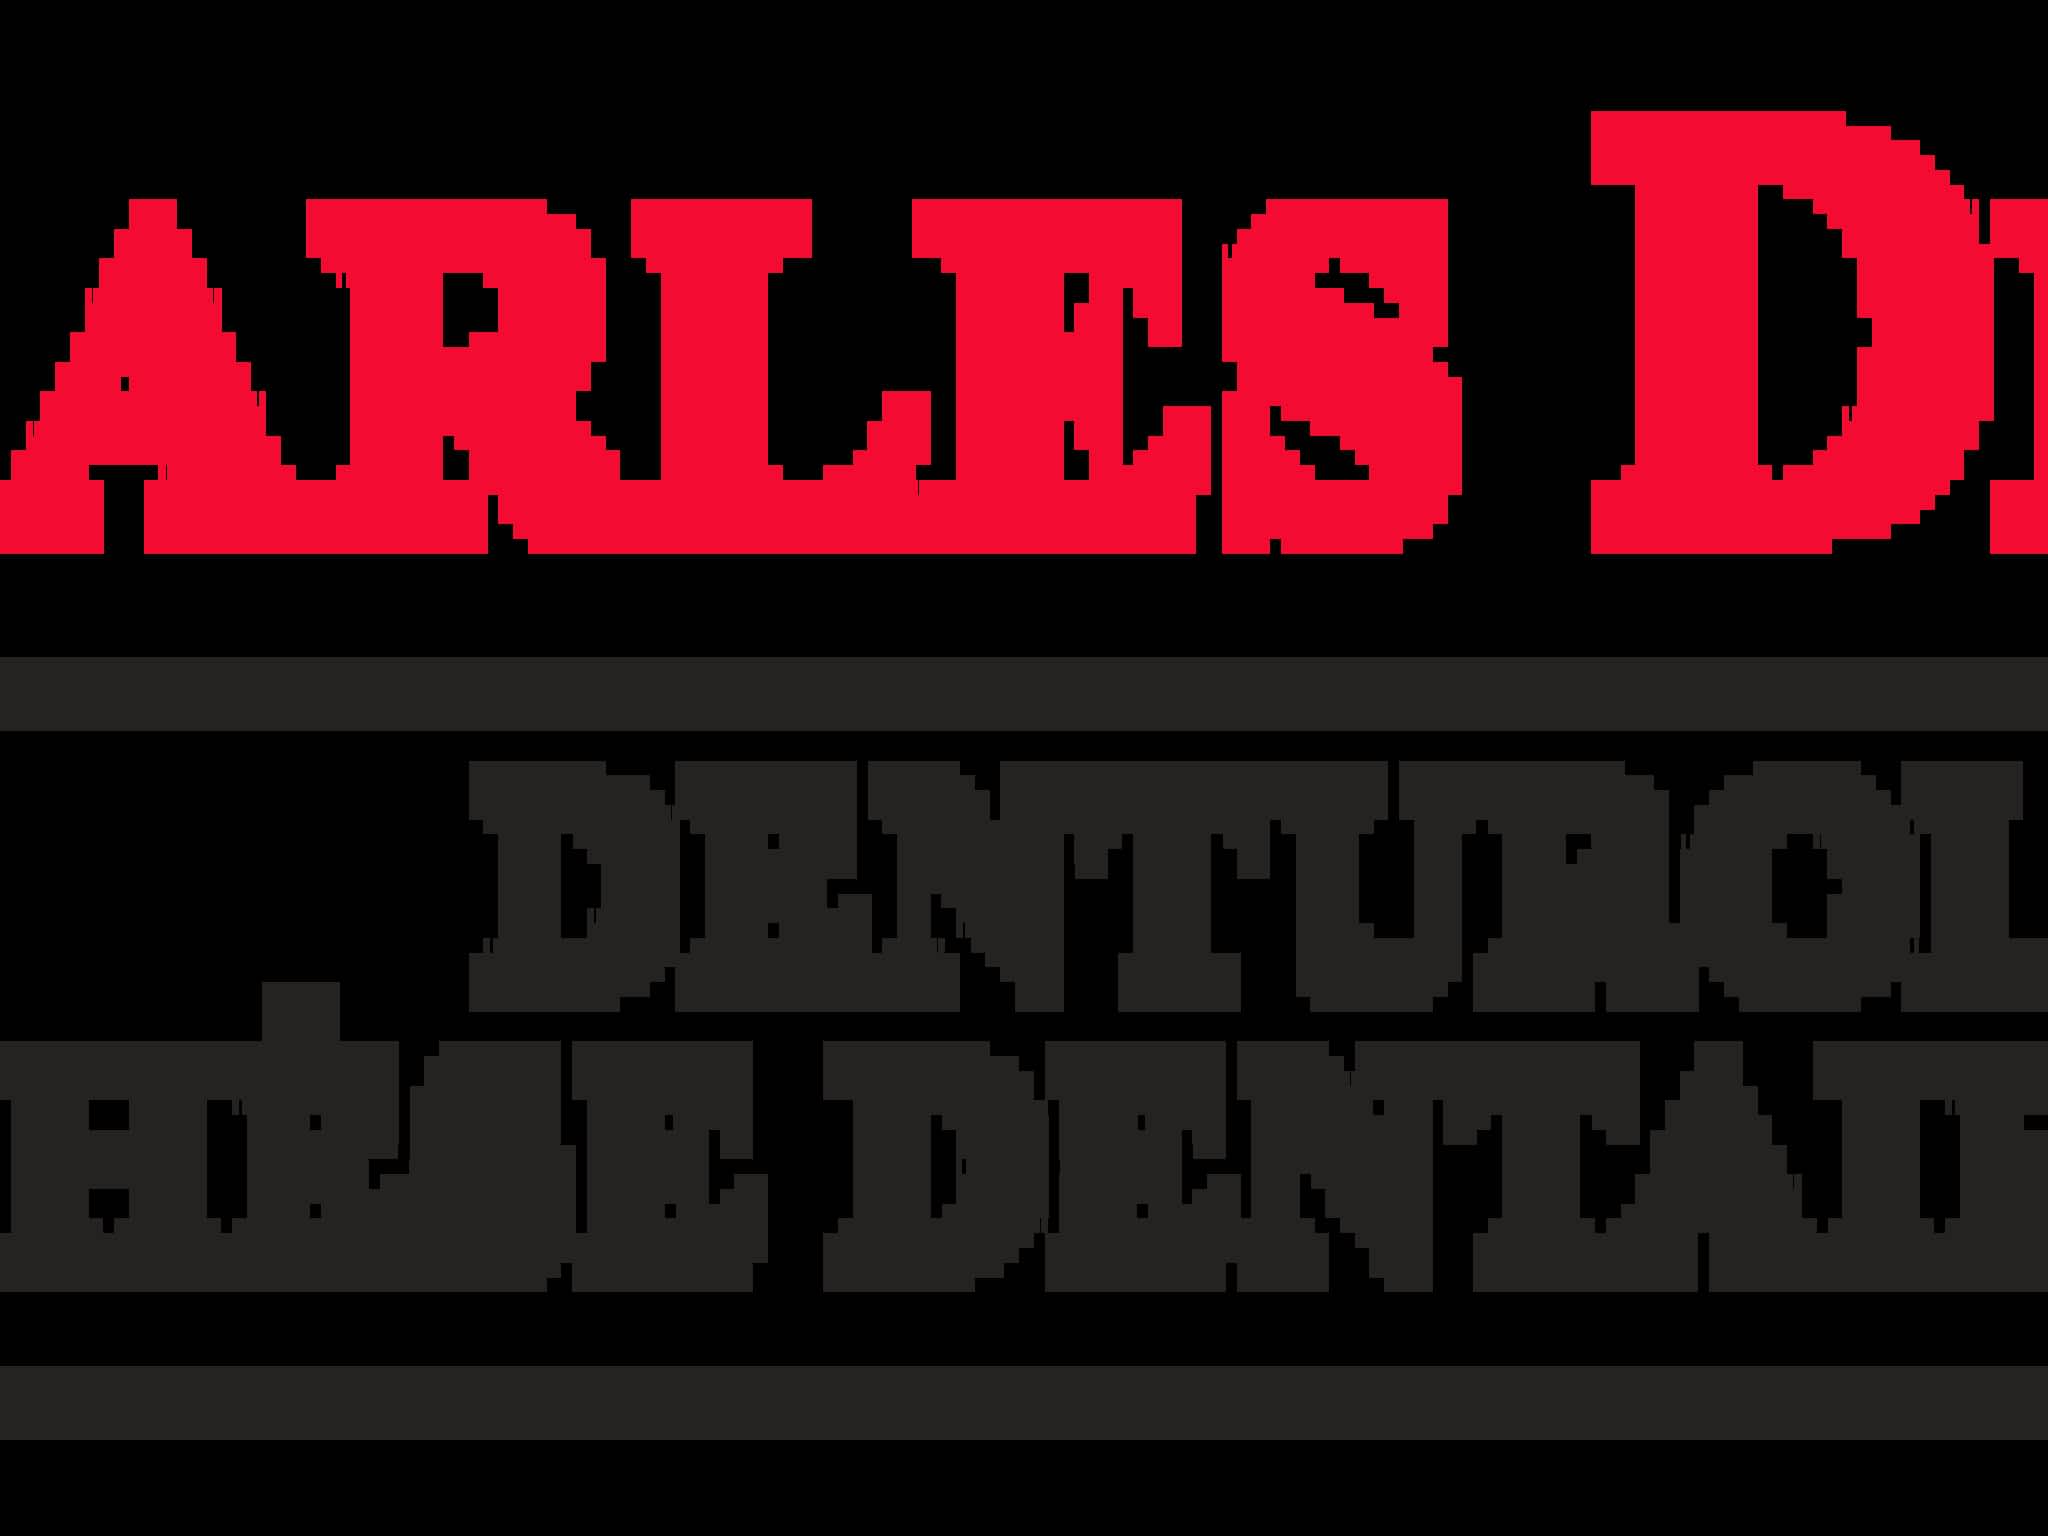 photo Charles Déziel Denturologiste Inc